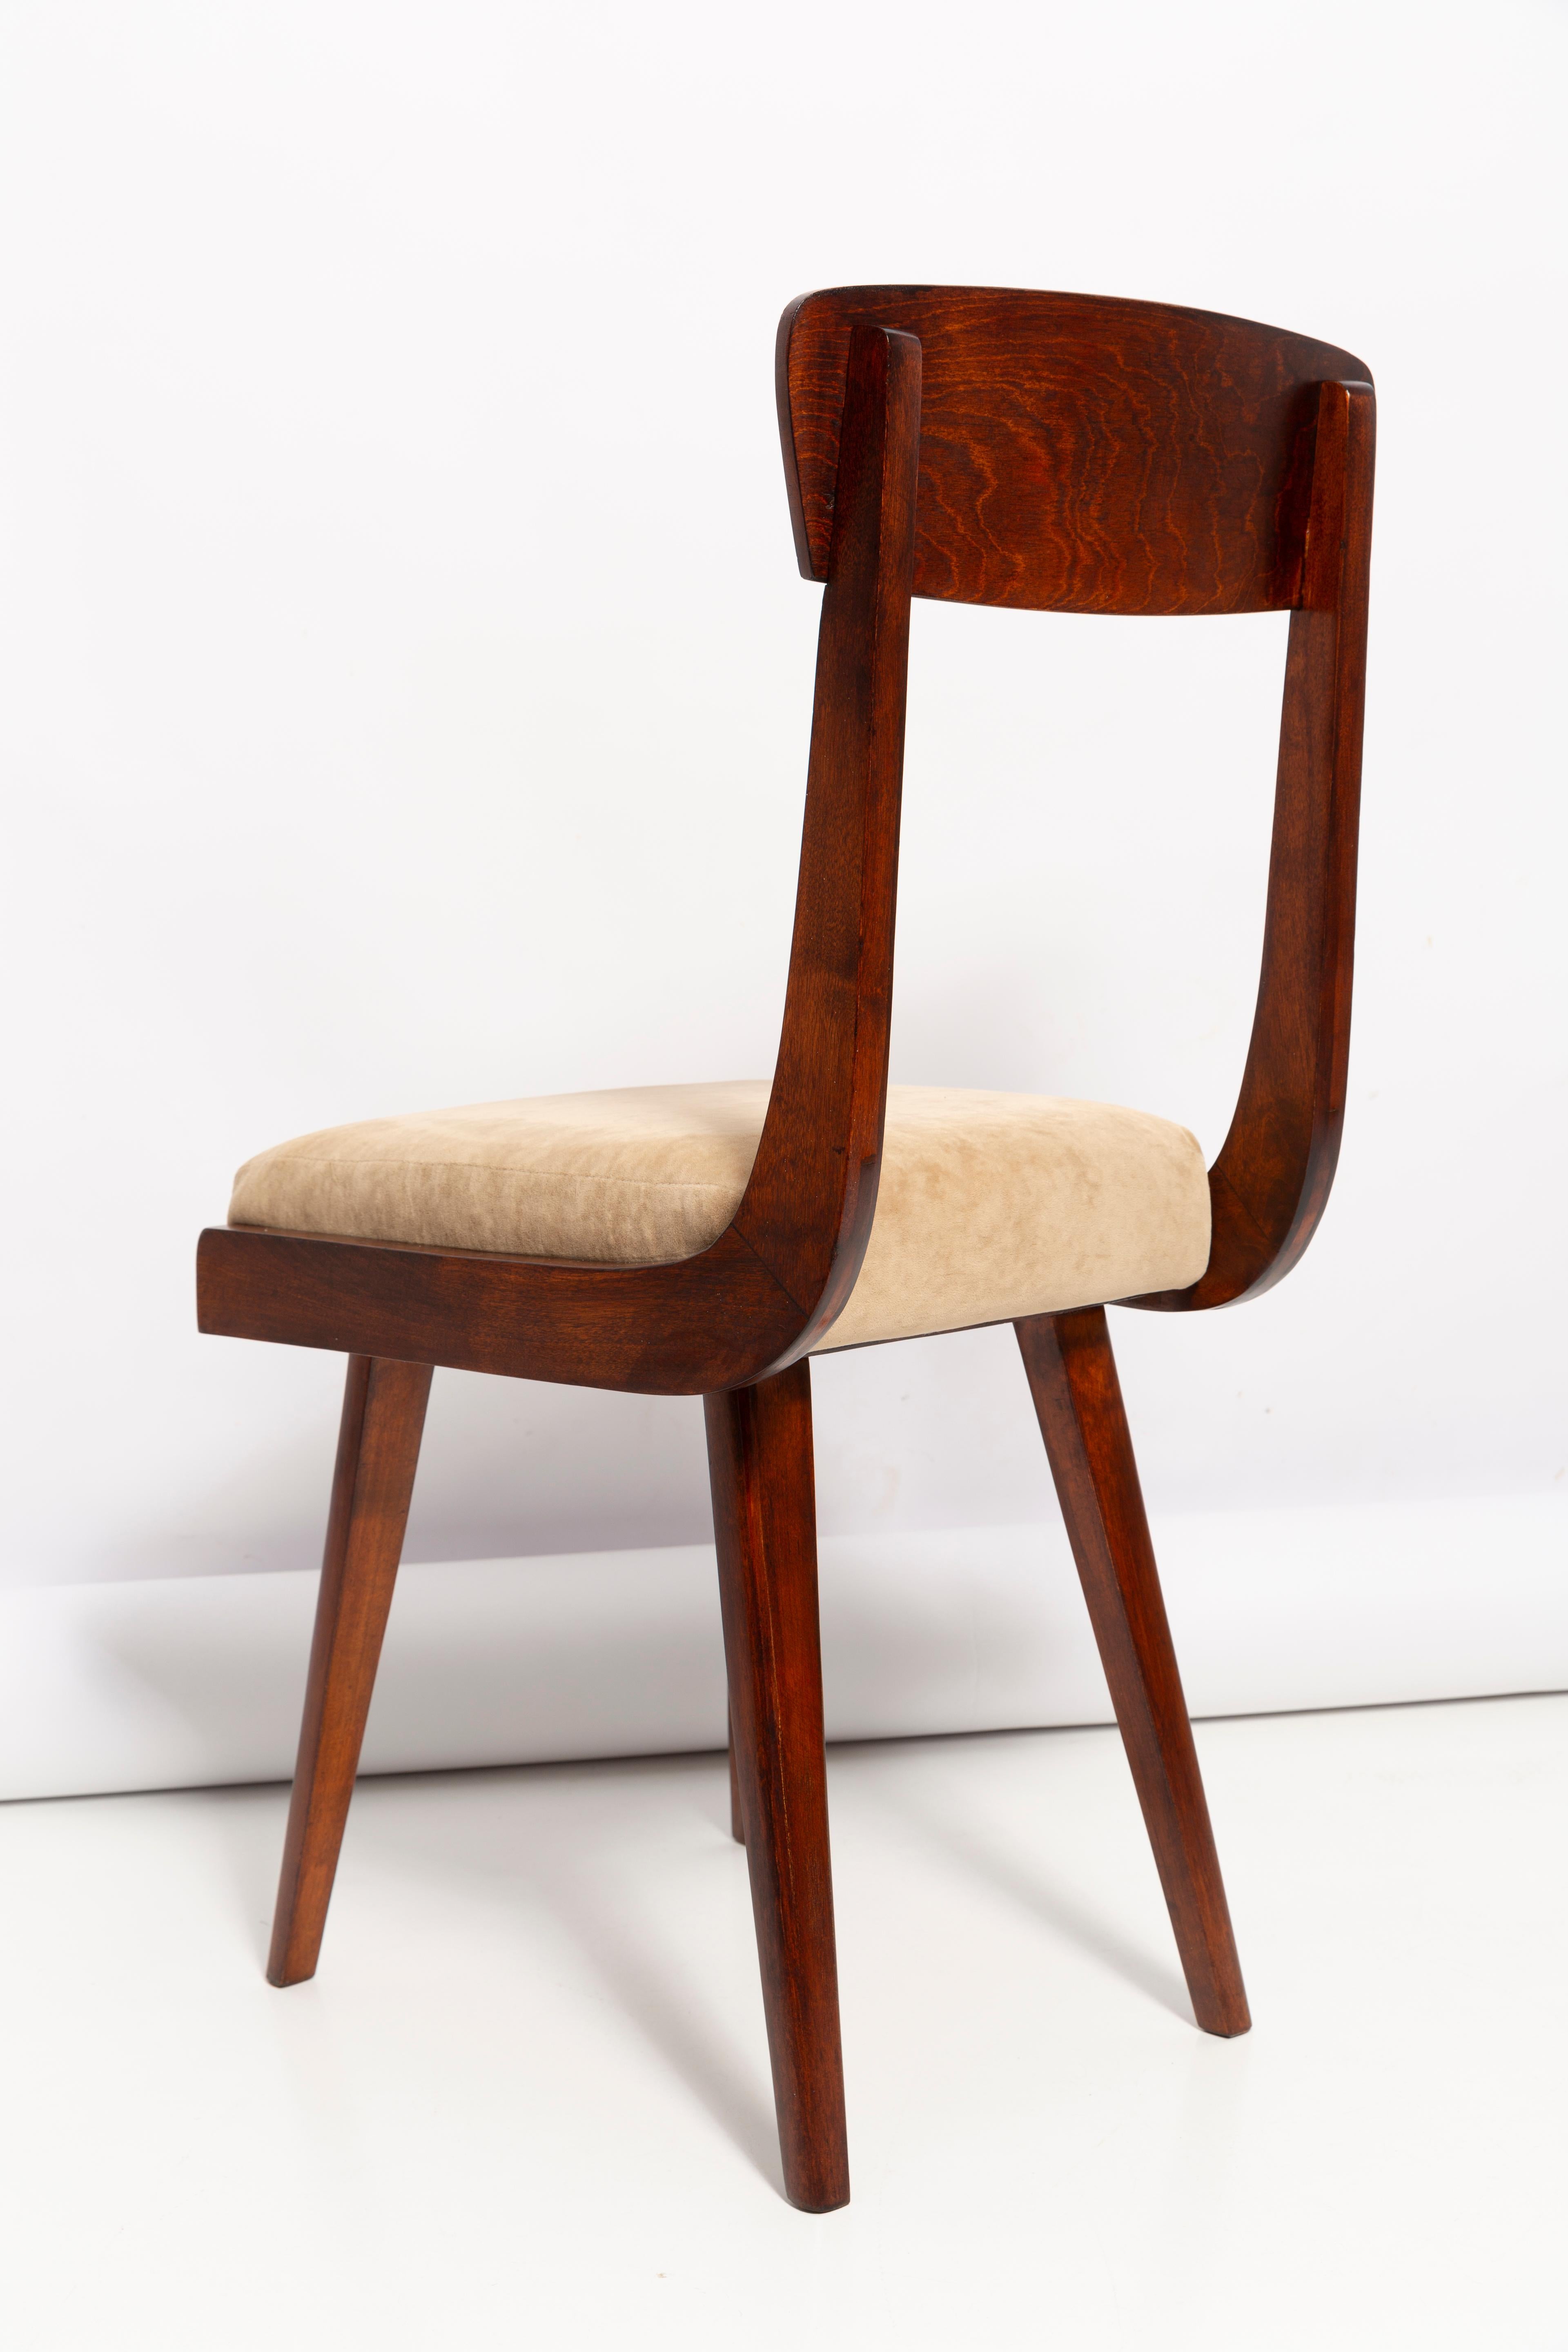 Mid Century Gazelle Beige Wood Chair, Europe, 1960s For Sale 3